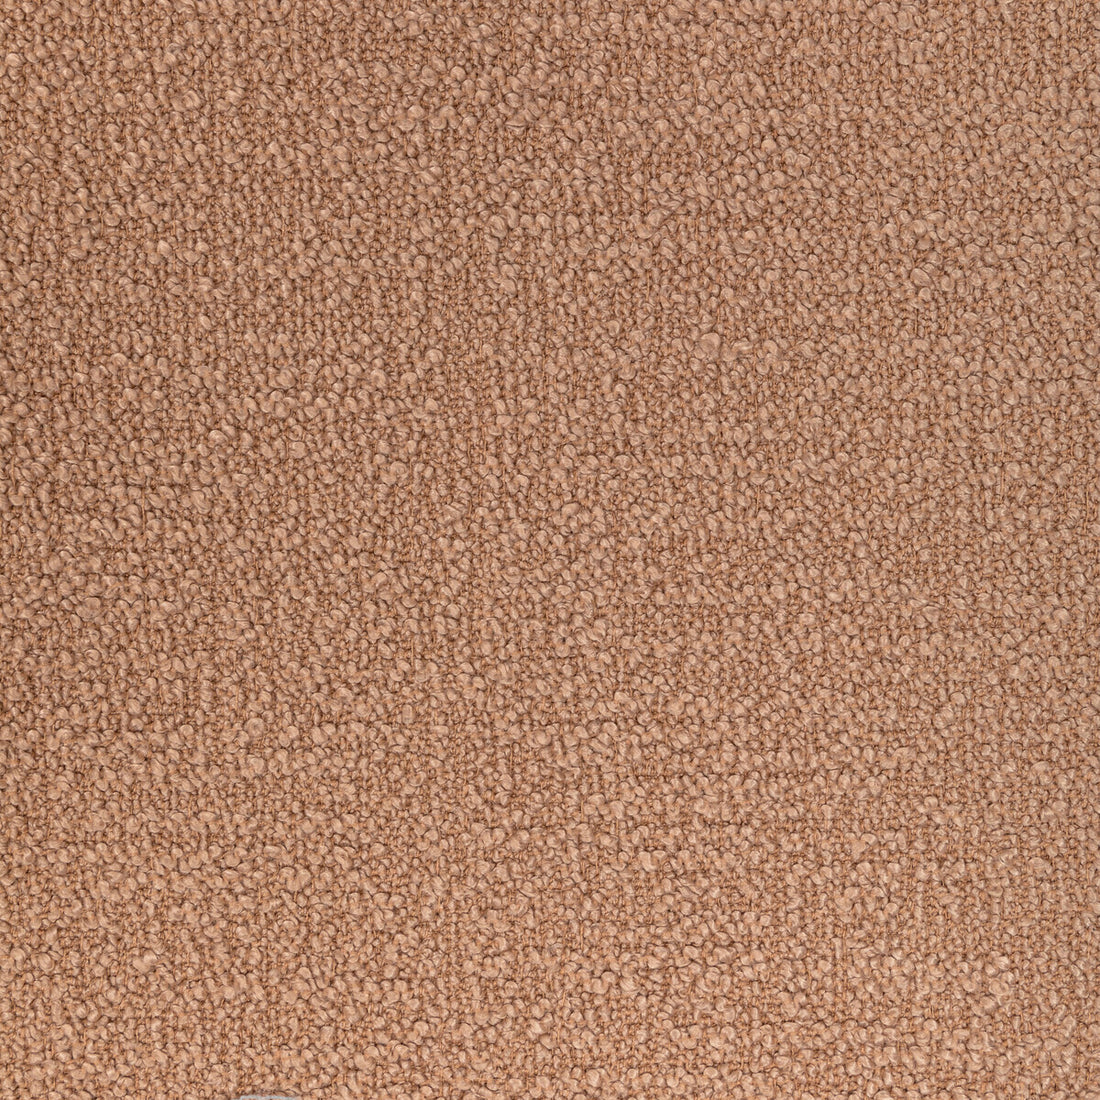 Kravet Smart fabric in 36857-77 color - pattern 36857.77.0 - by Kravet Smart in the Performance Kravetarmor collection